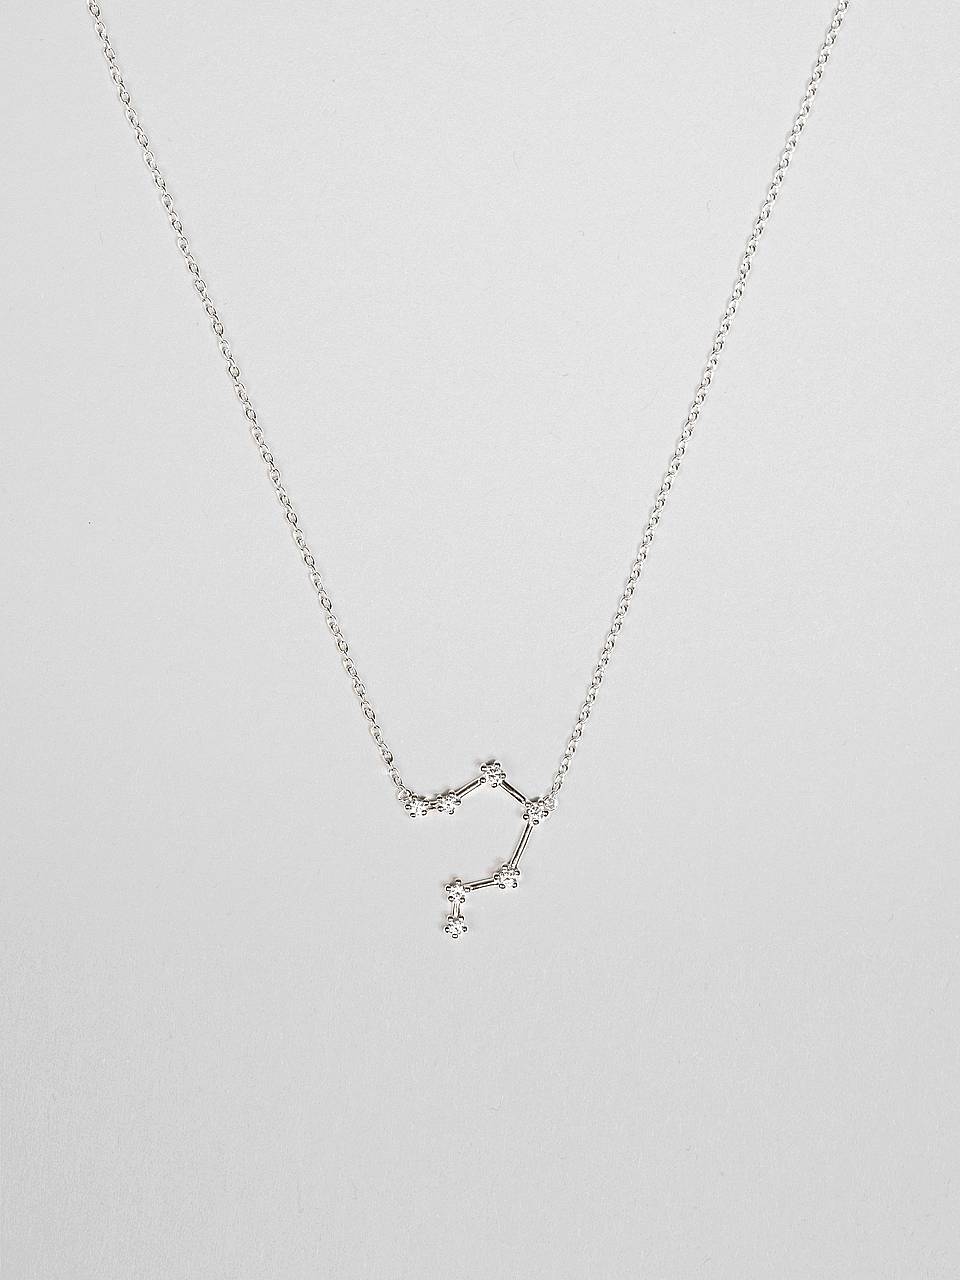 Libra Zodiac Constellation Necklace